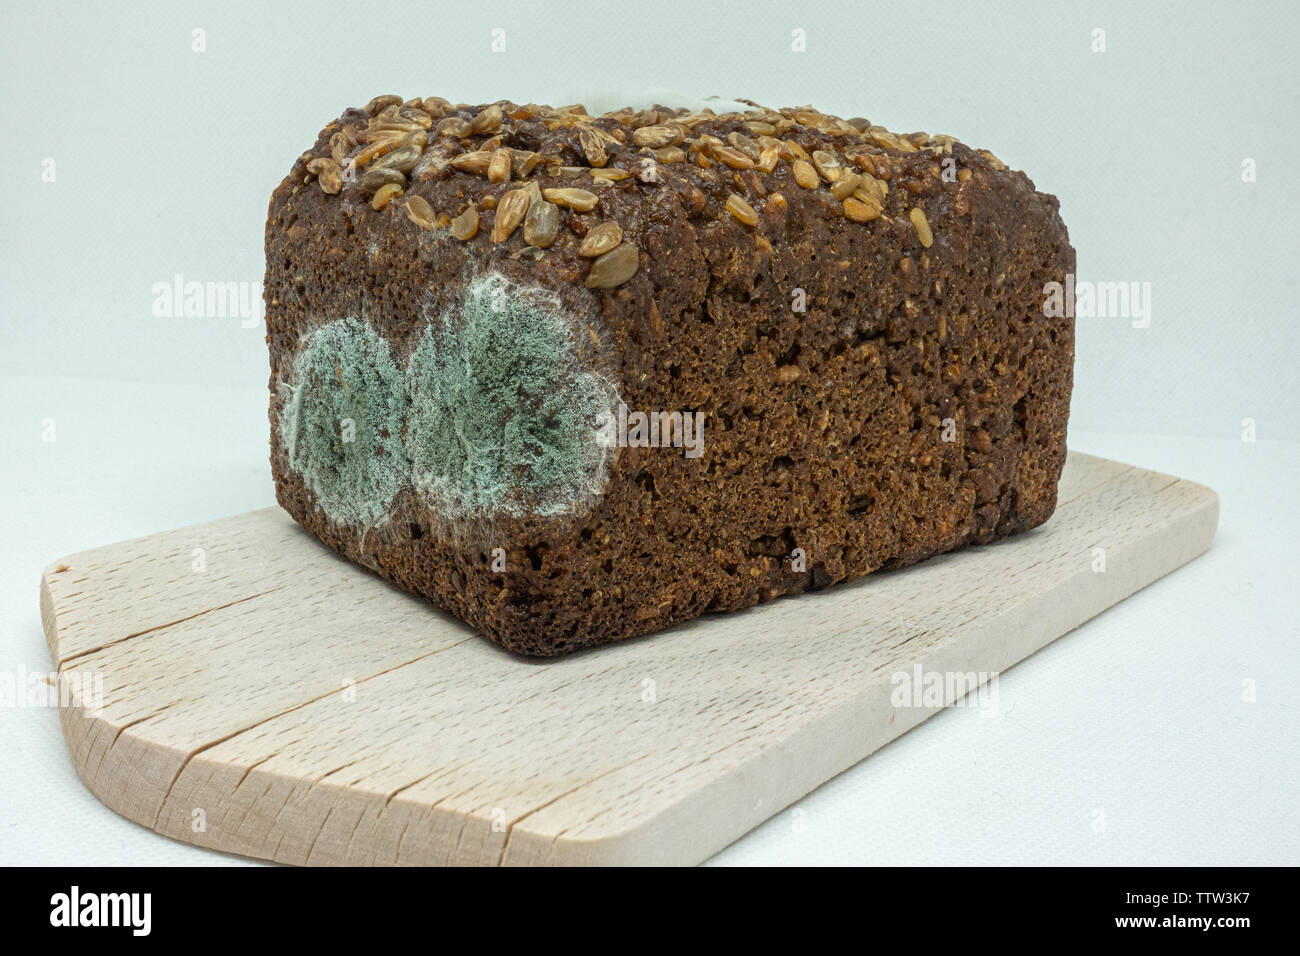 moldy rye bread lies on a wooden board Stock Photo